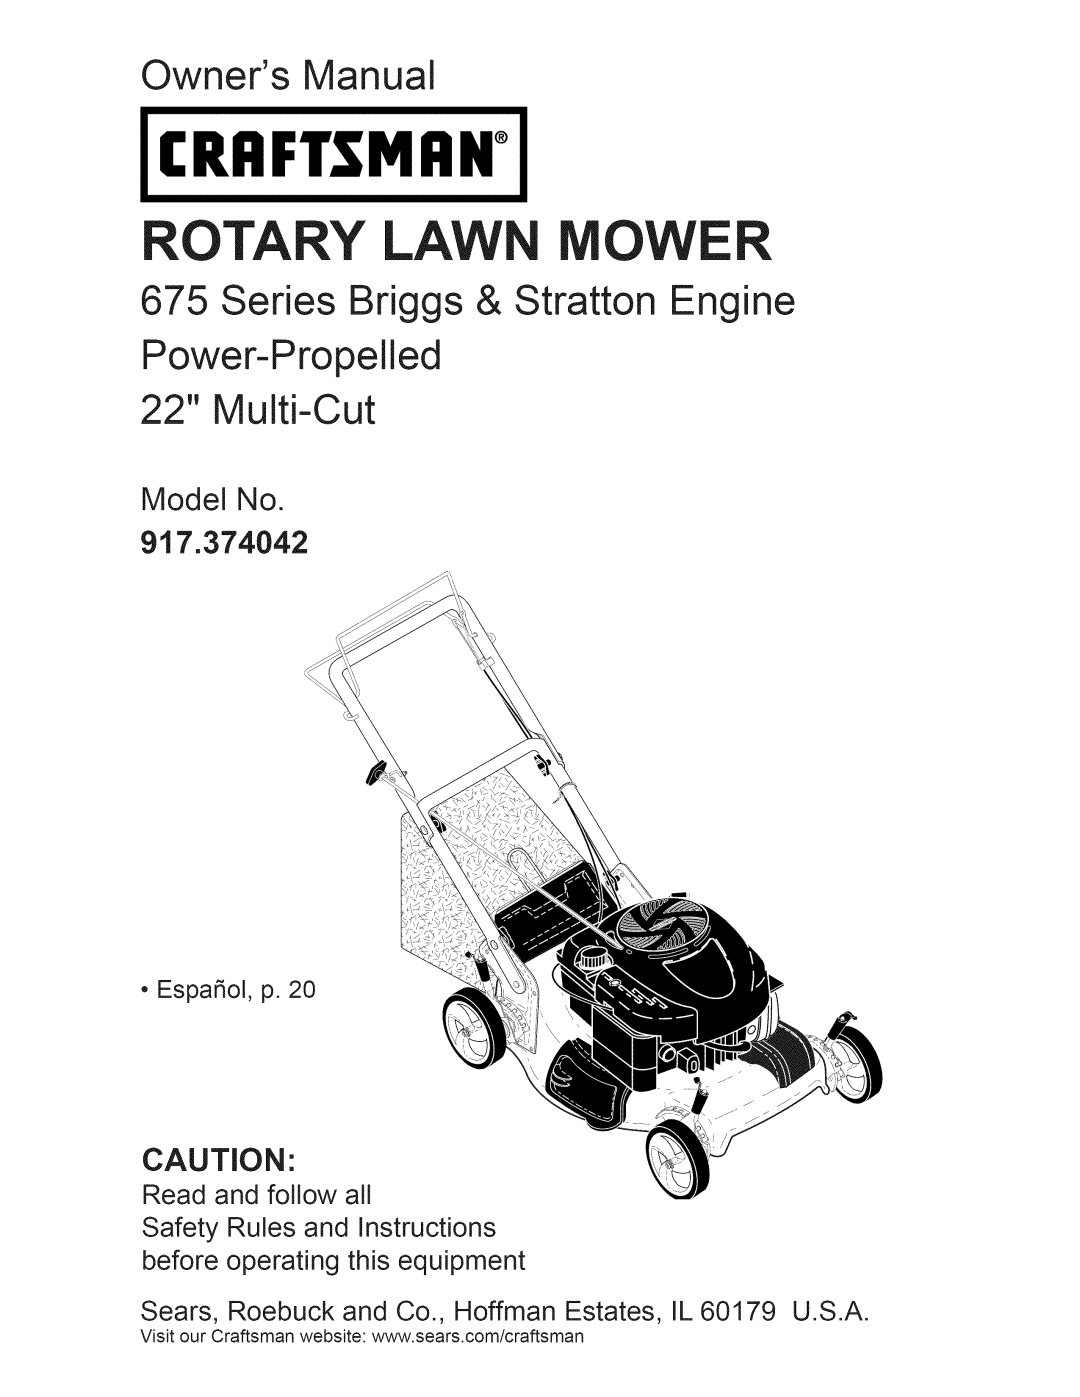 Craftsman owner manual Model No 917.374042, Craftsman, Rotary Lawn Mower, Owners Manual, Power-Propelled 22 Multi-Cut 